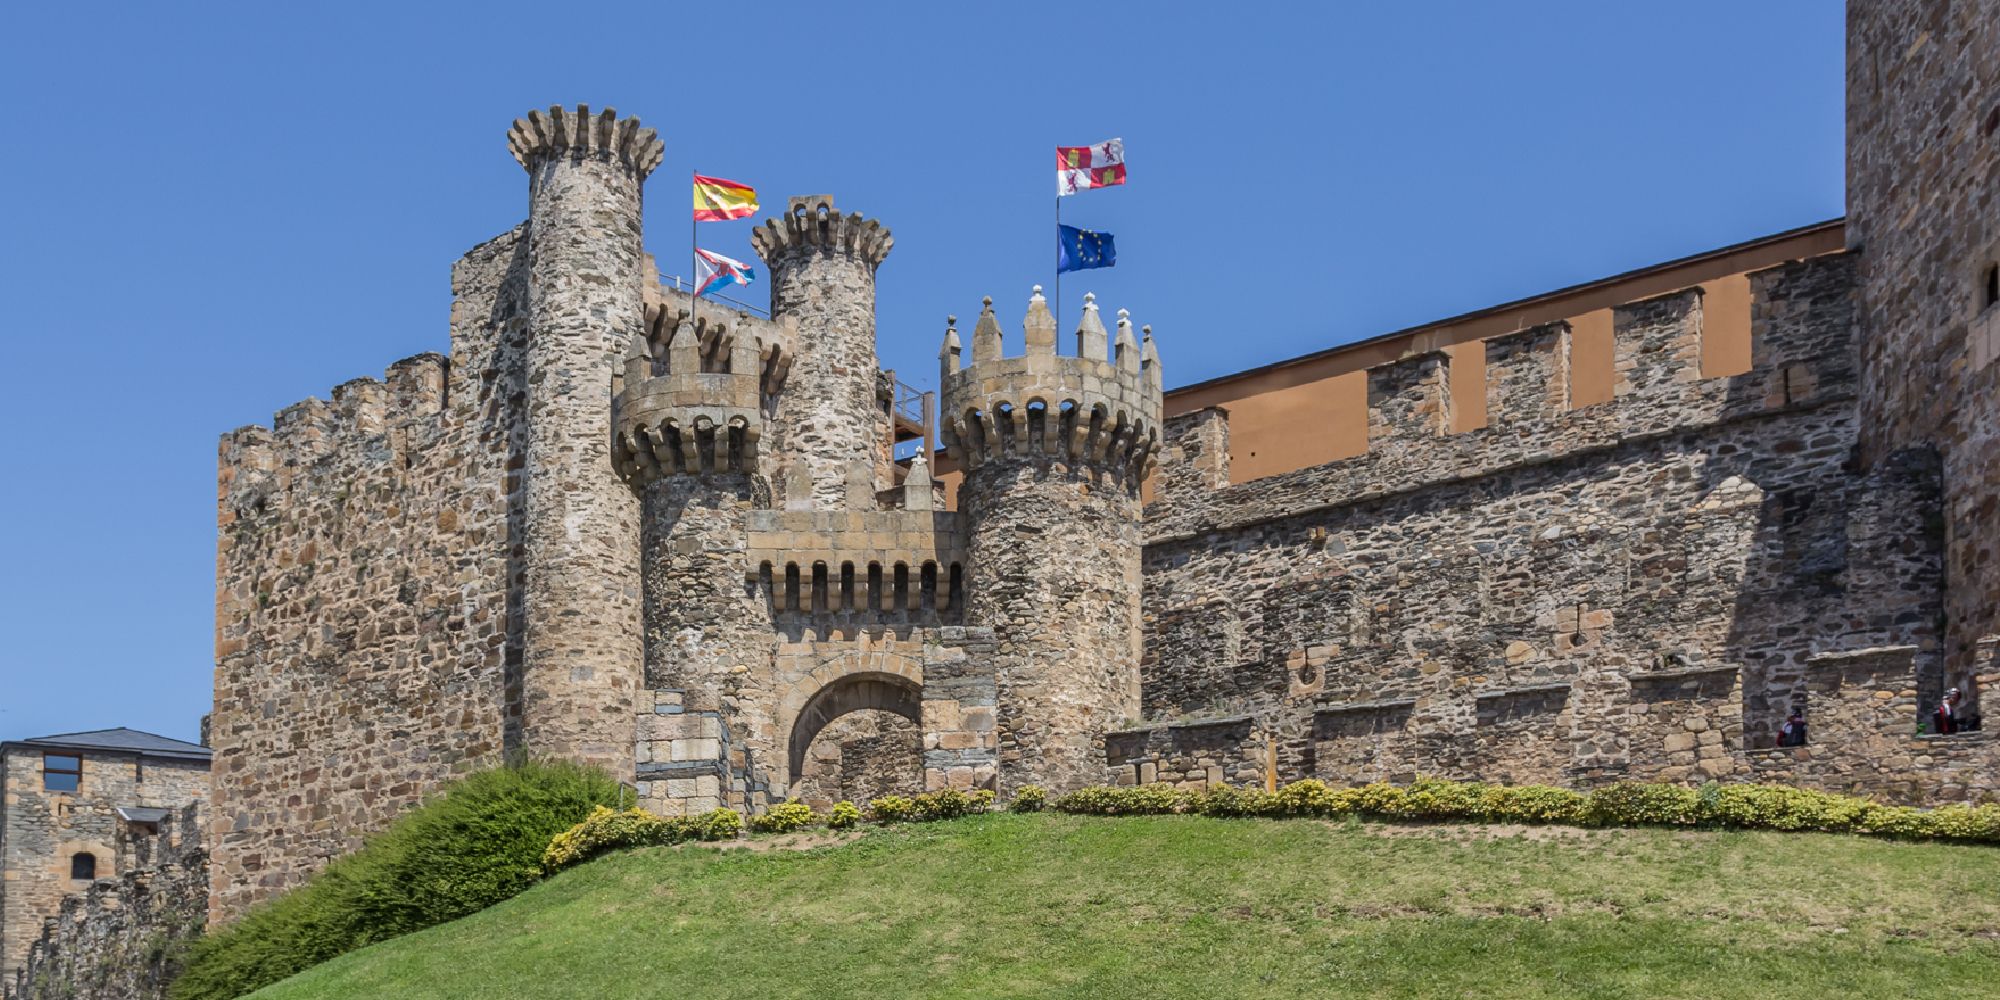 The Templars Castle in Ponferrada, Spain